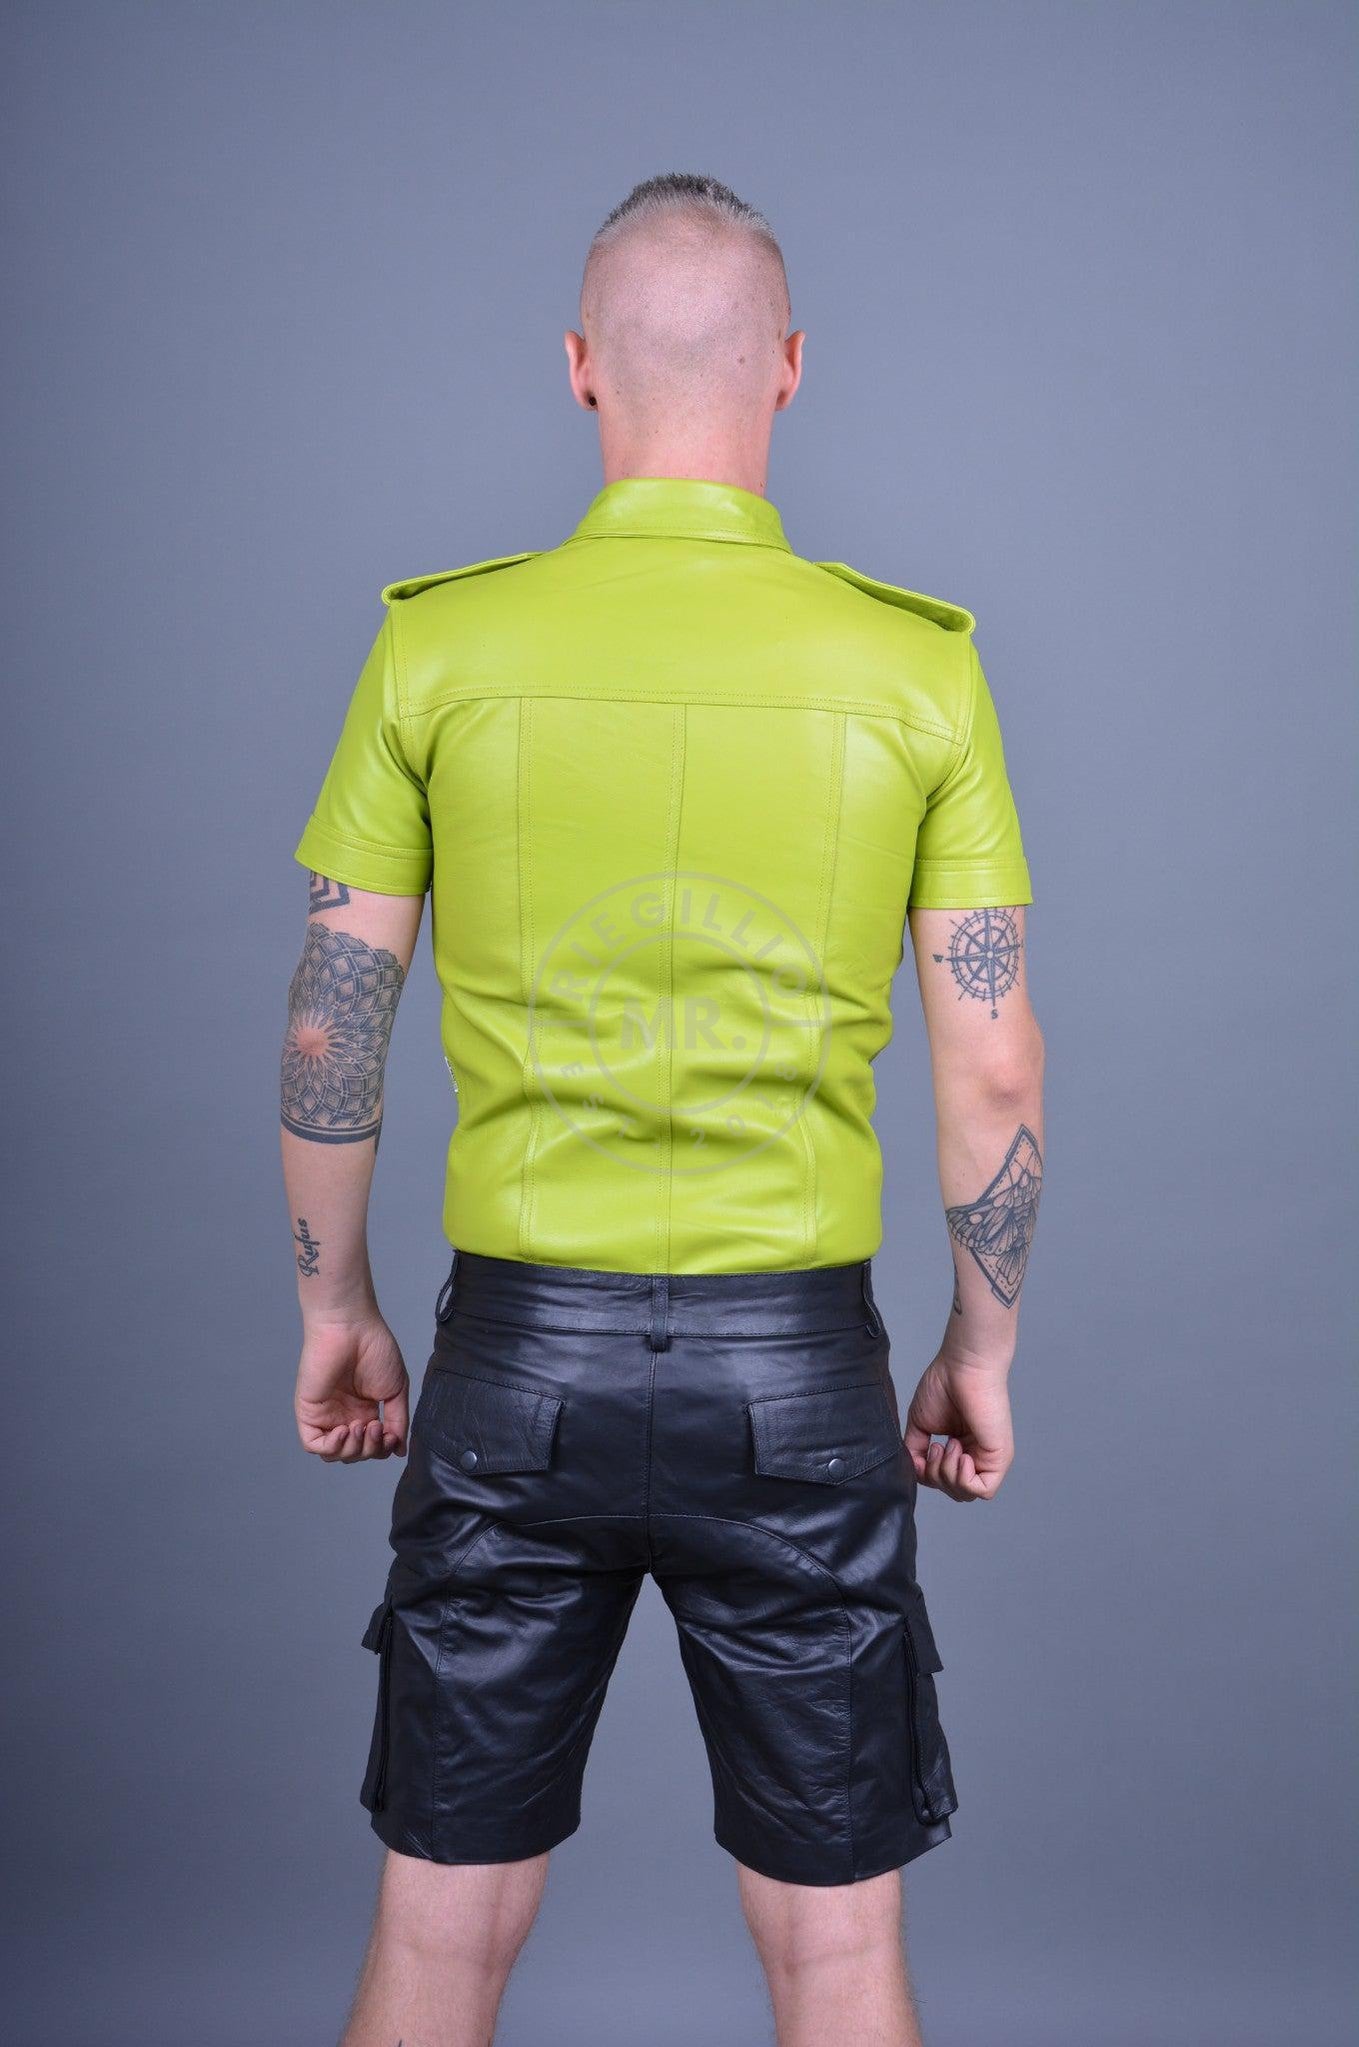 Lime Leather Shirt at MR. Riegillio